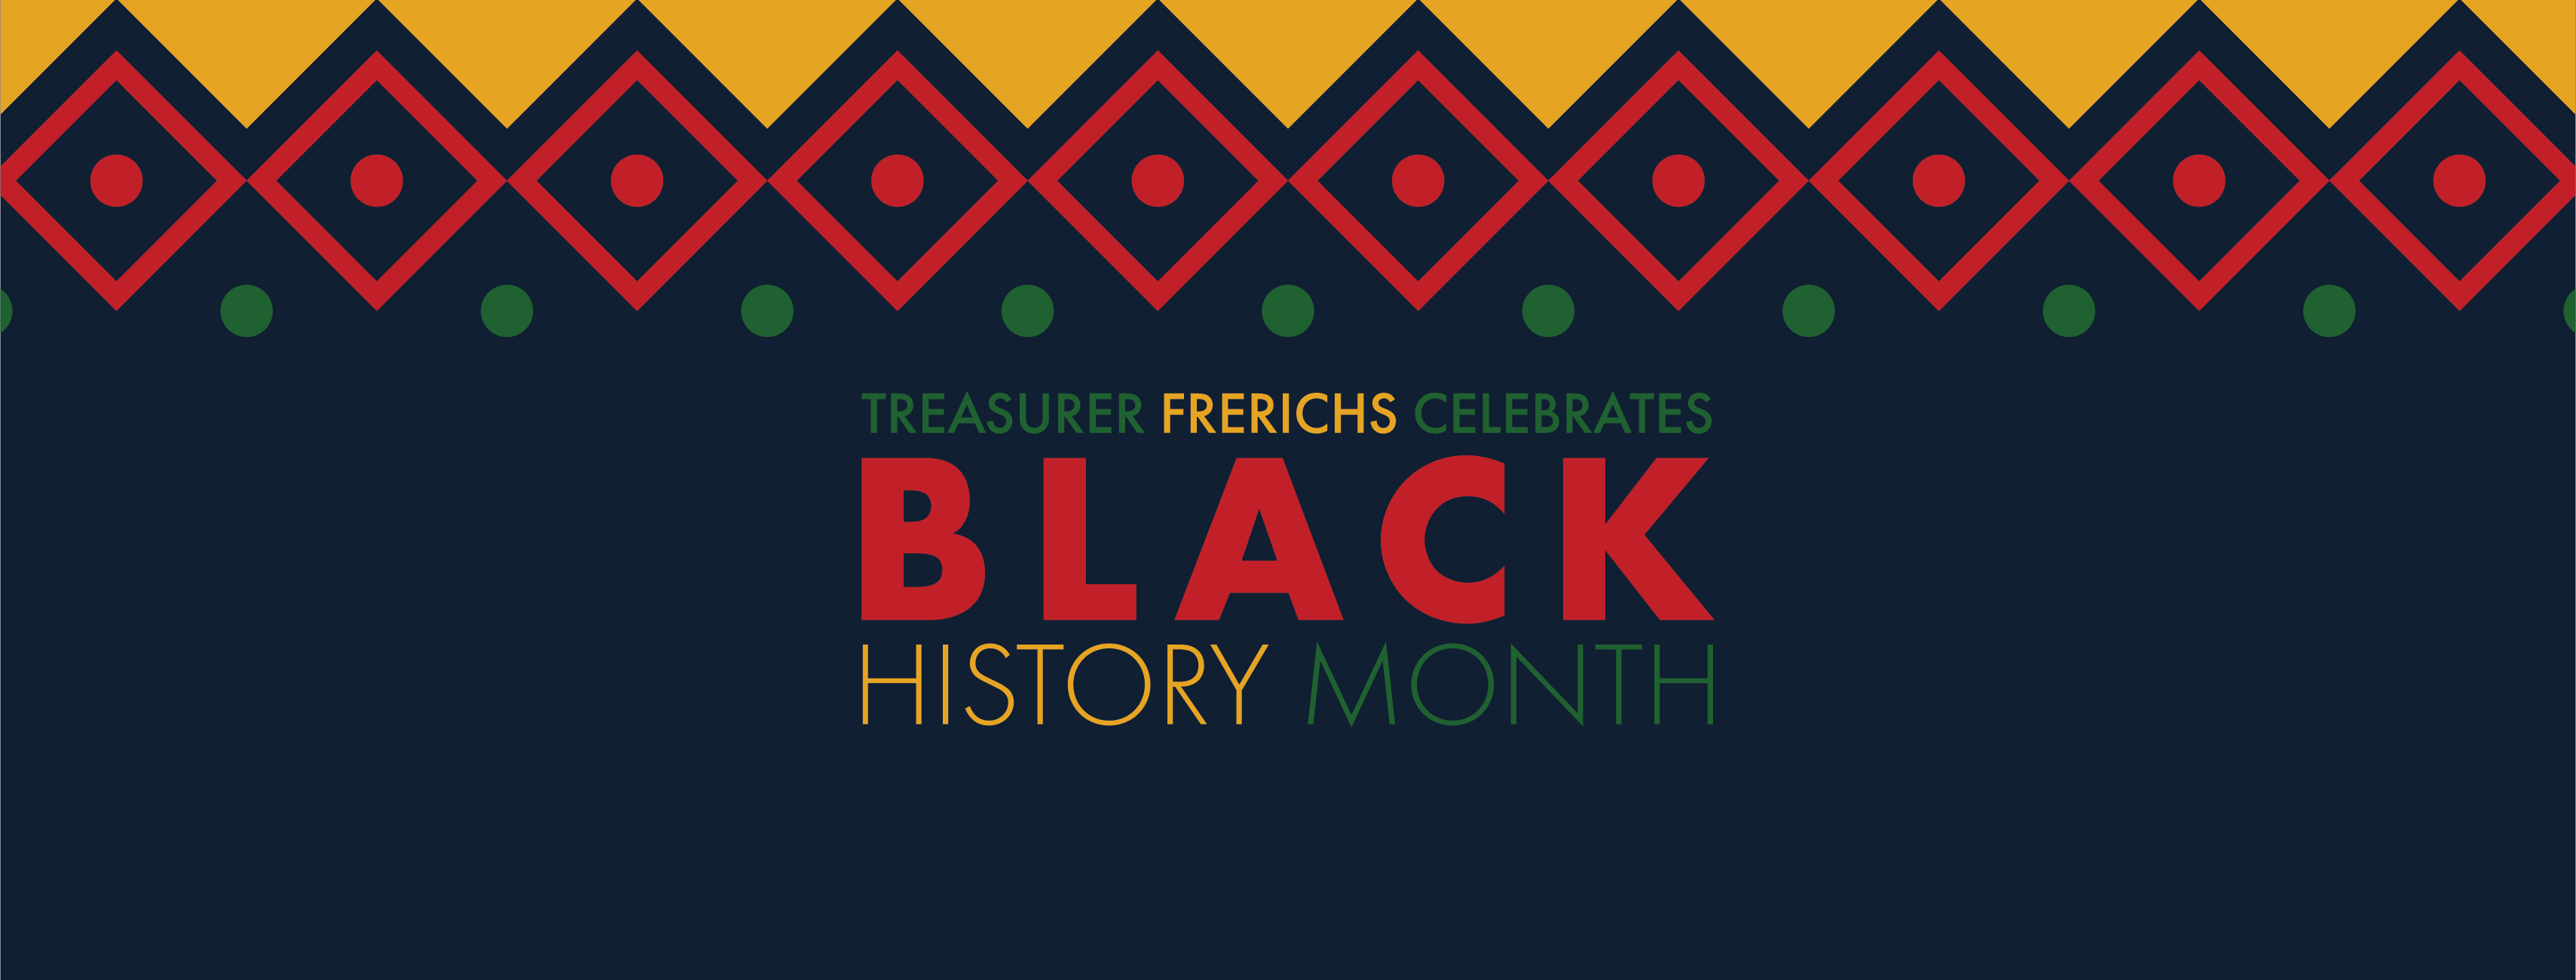 Treasurer Frerichs Celebrates Black History Month